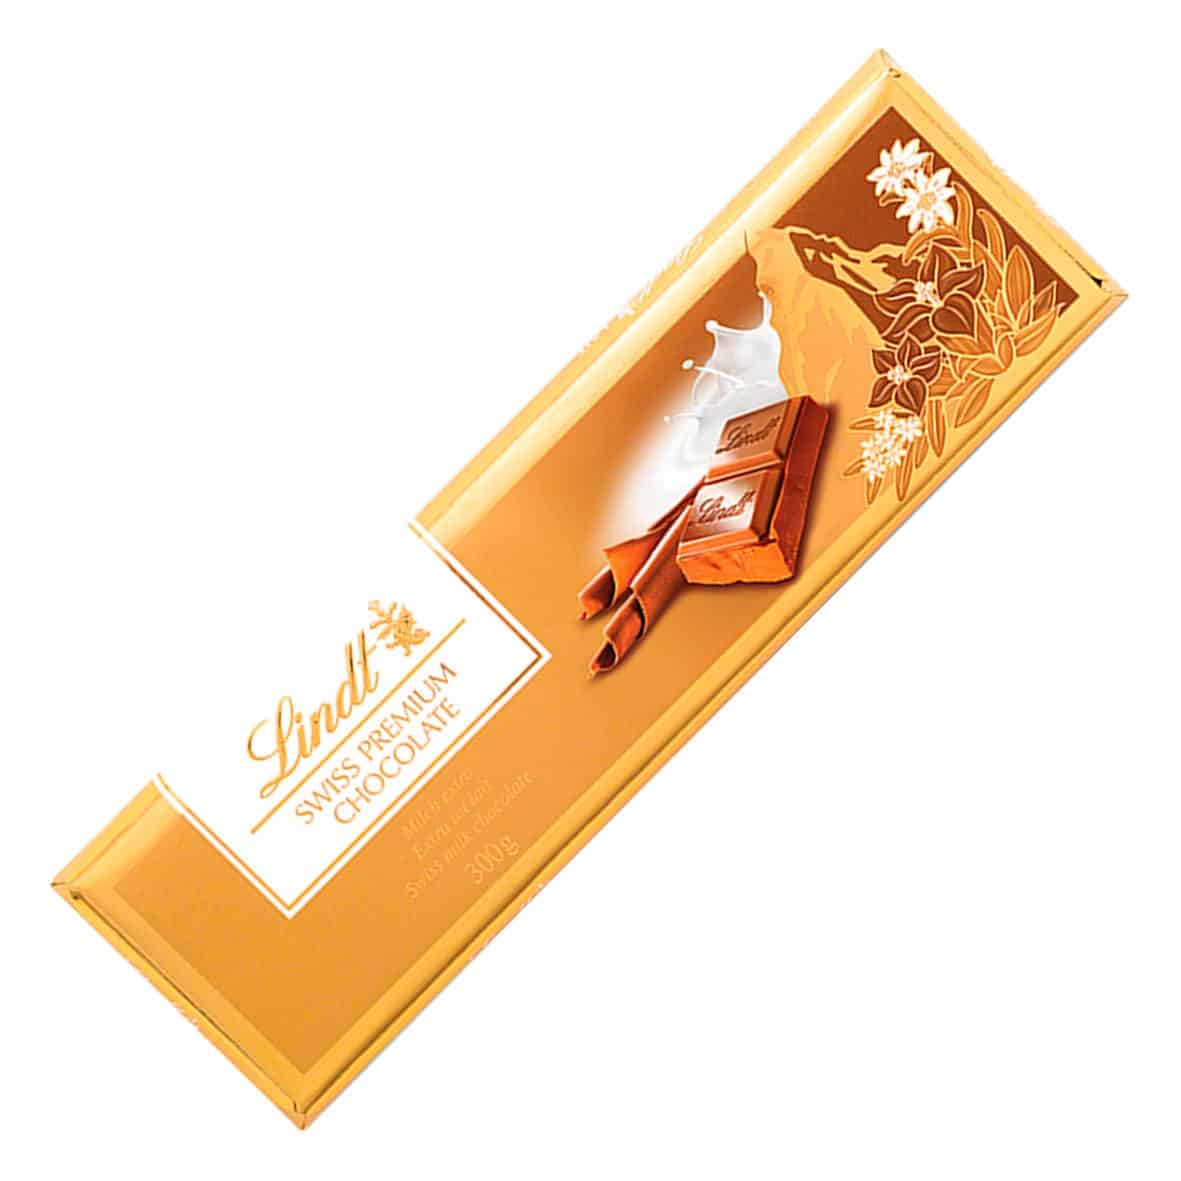 300 гр шоколада. Шоколад Lindt Swiss Premium. Шоколад Lindt 300 Dark Chocolate. Шоколад Lindt Swiss Premium 300 гр. Lindt Swiss Premium Chocolate 300g.